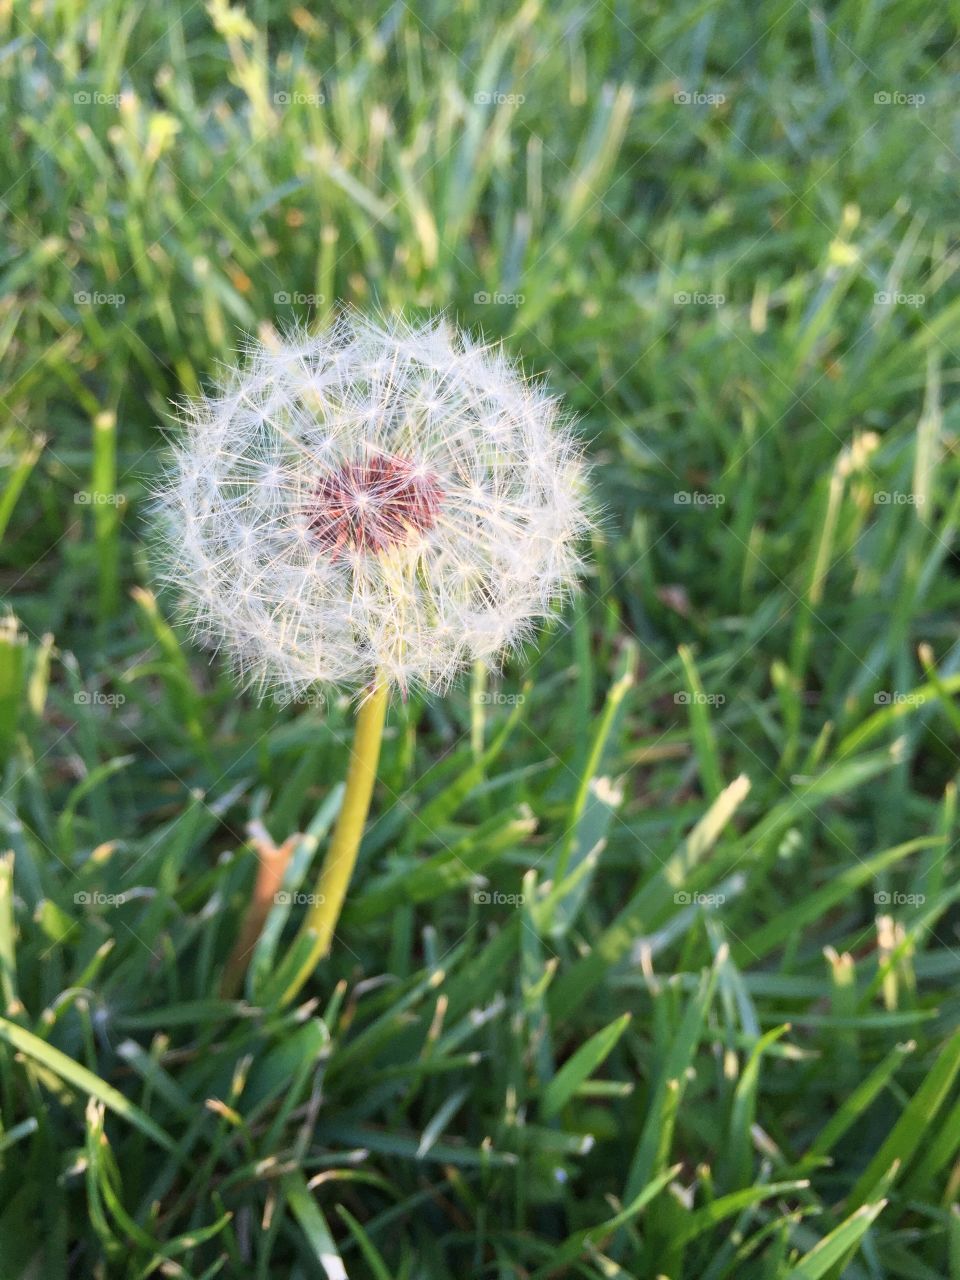 Dandelion puff in the grass.